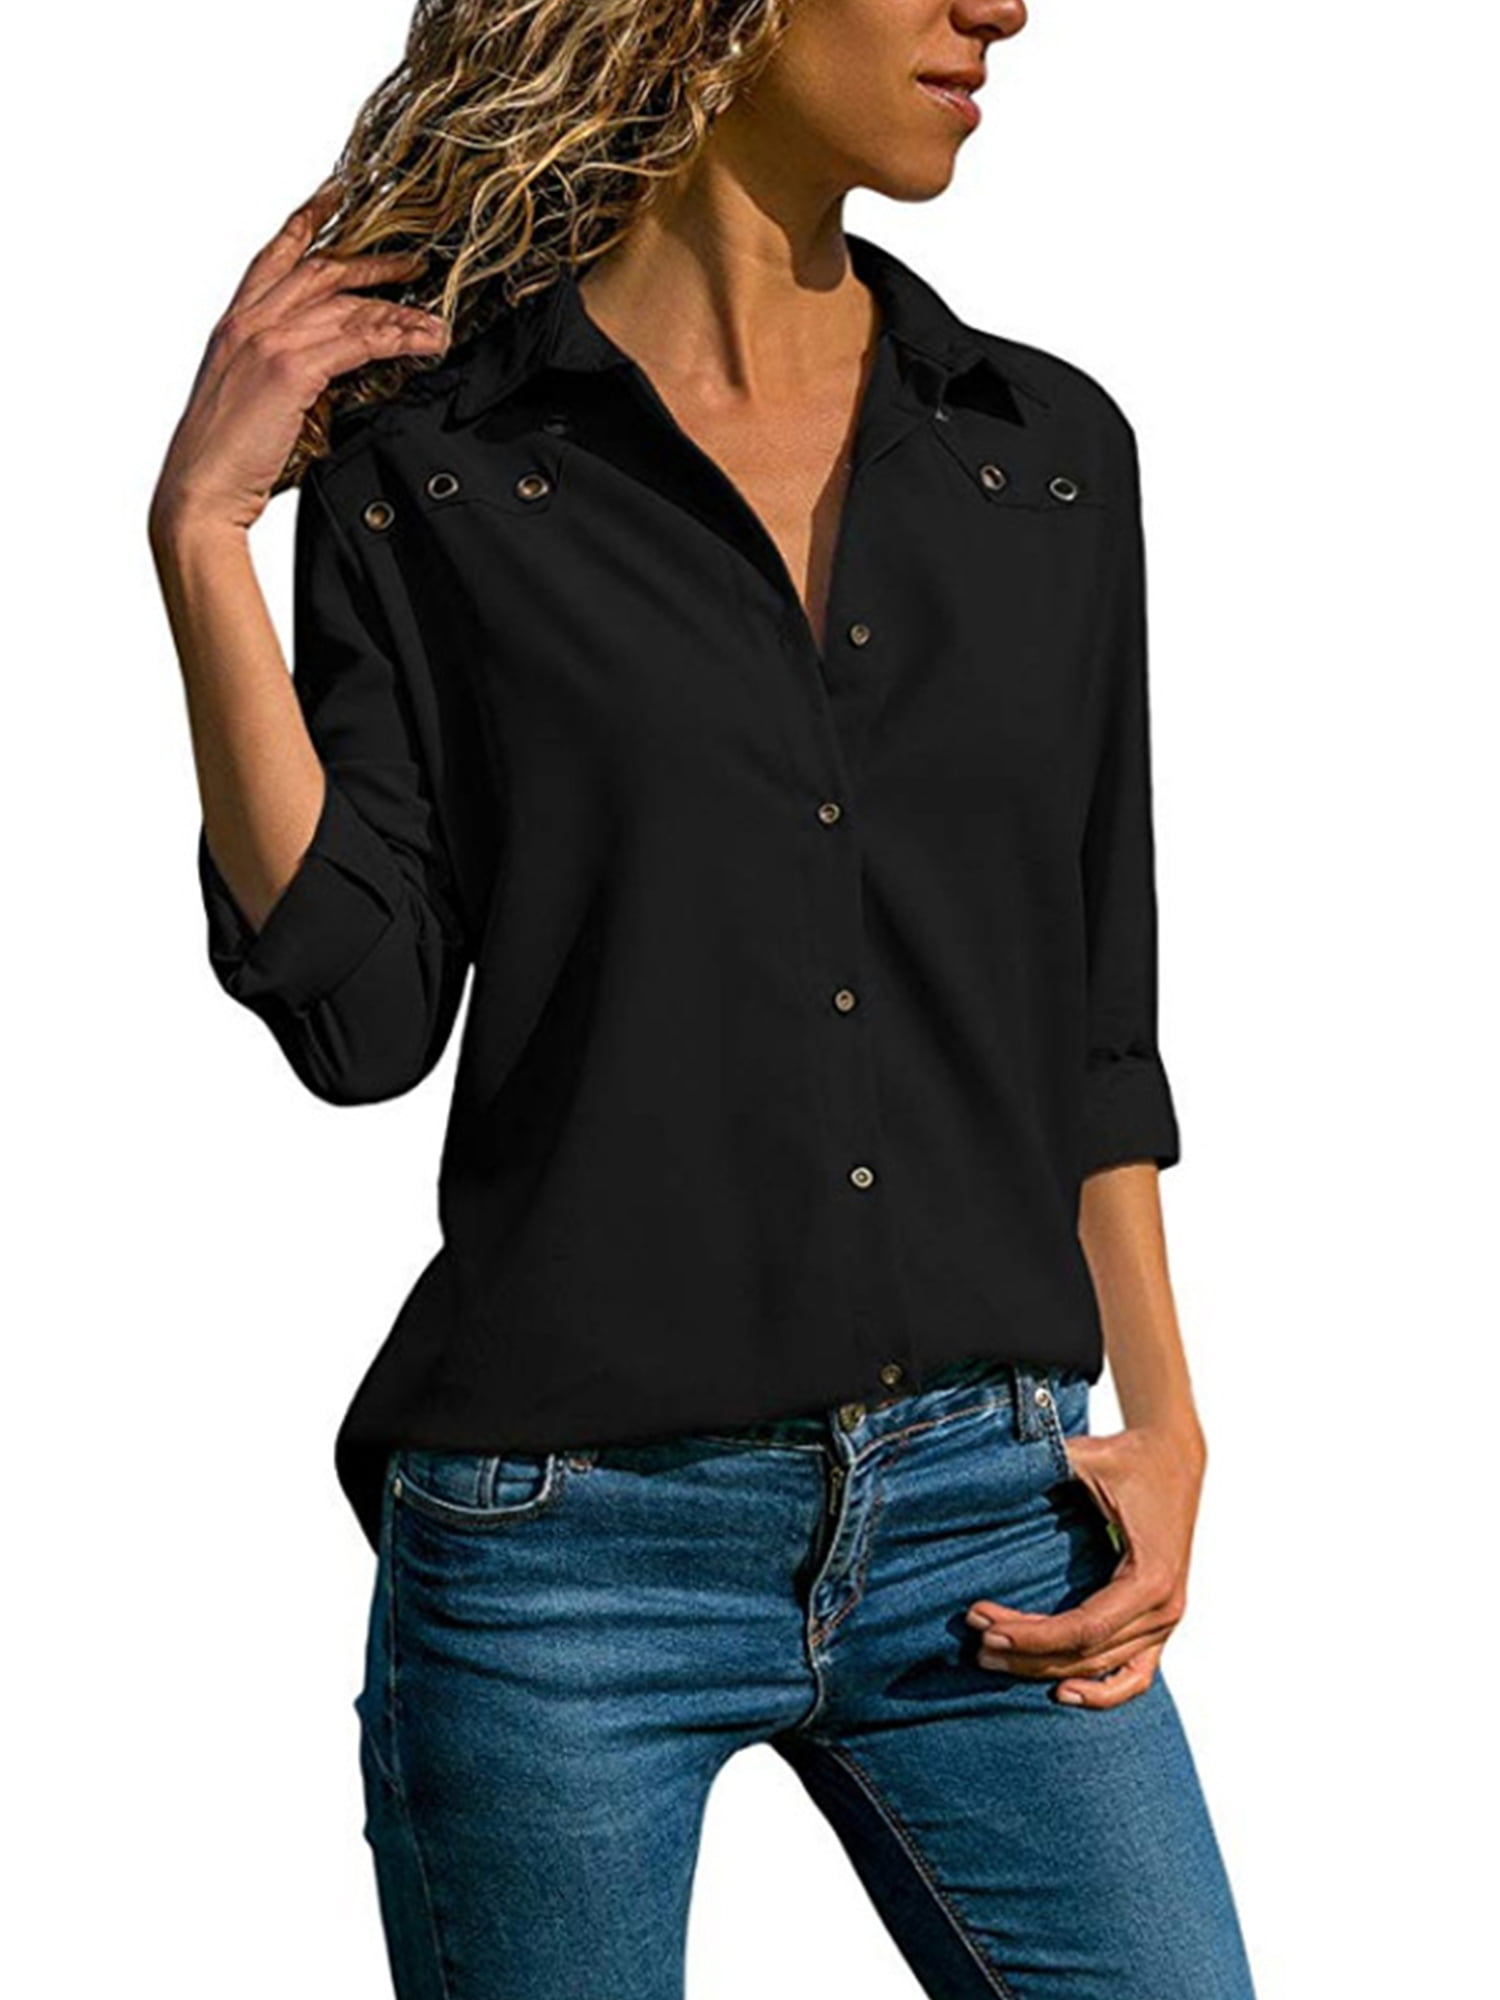 Women Grils Long Sleeve Baby Collar Blouse Tops Button Down OL Shirt